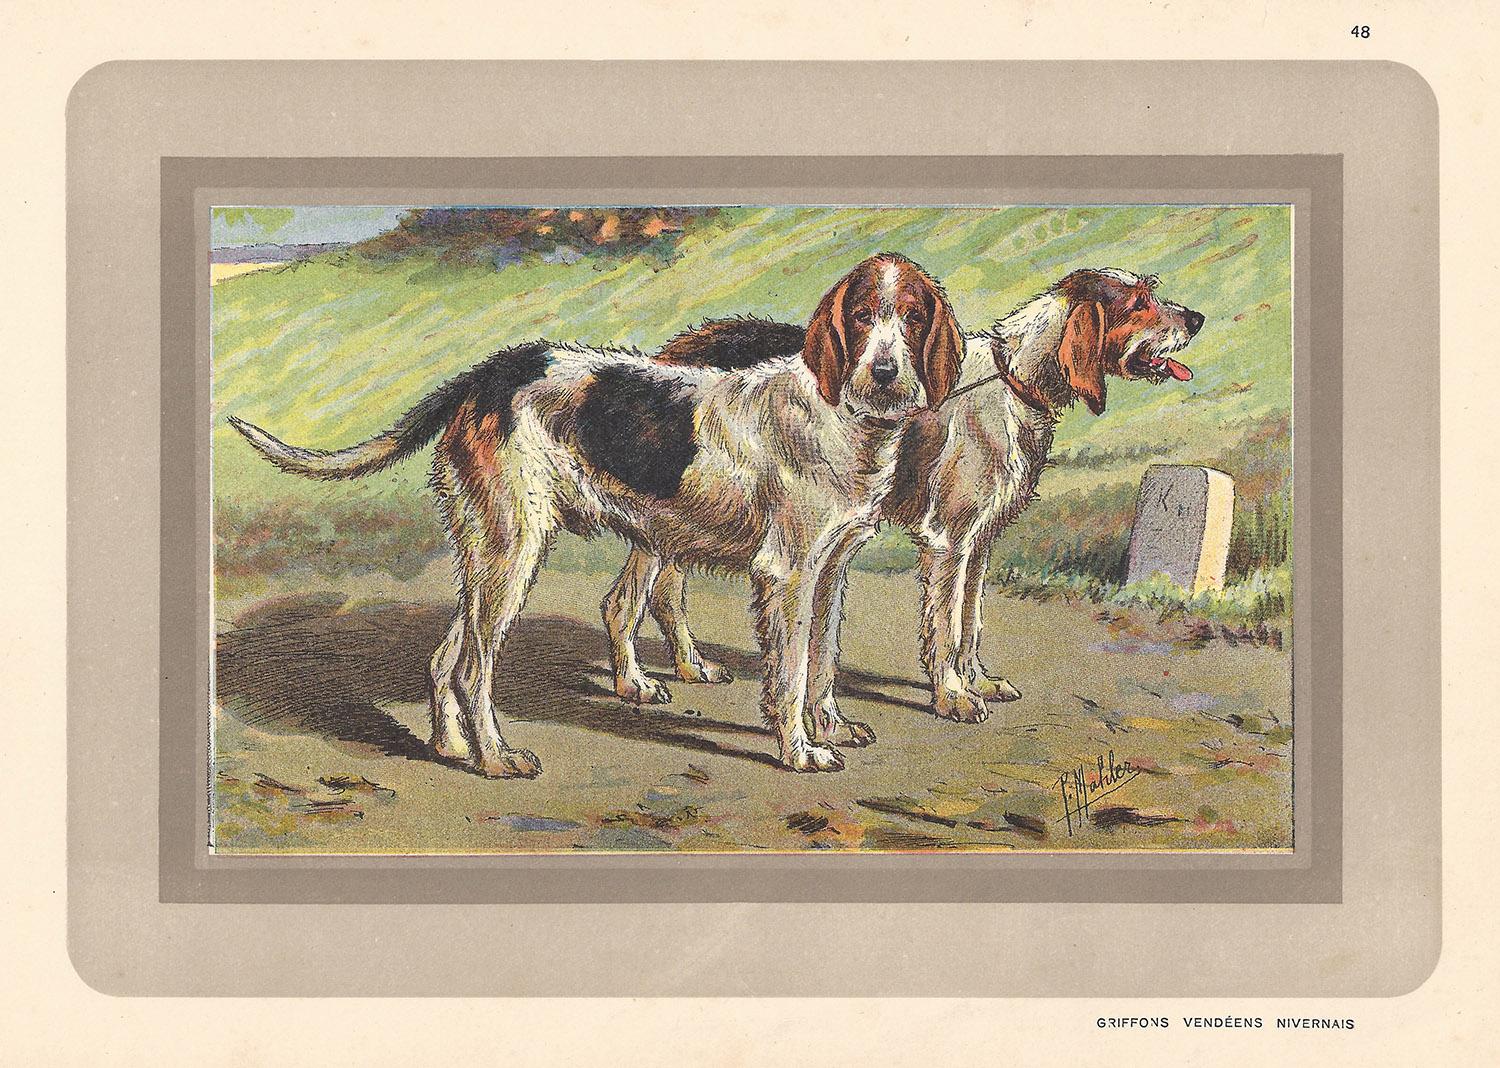 Griffon Vendeens Nivernais, chien chromolithographe franais, annes 1930